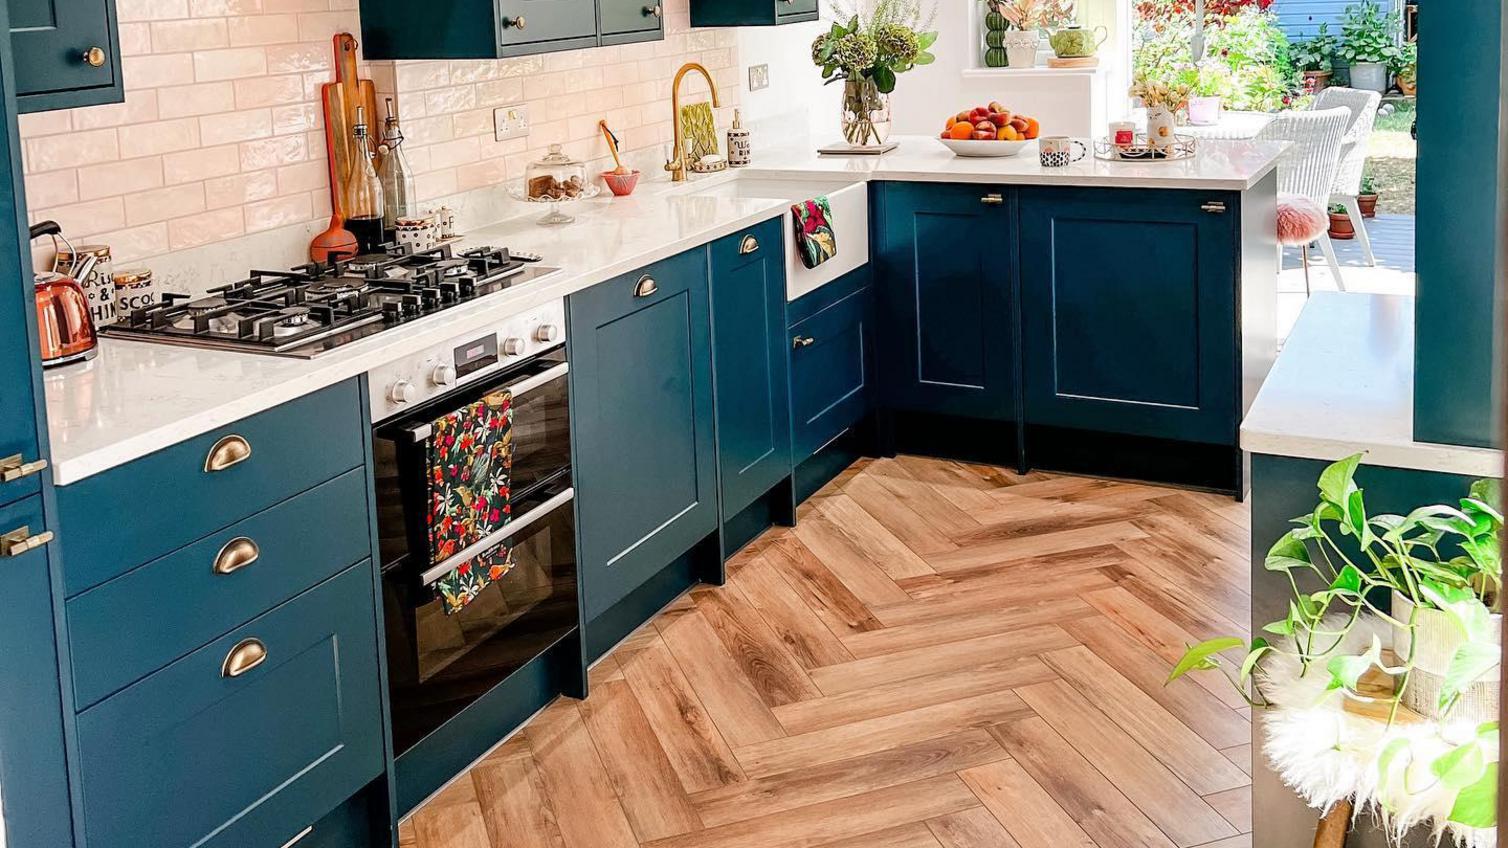 A bold, vibrant shaker kitchen with a stylish herringbone laminate flooring